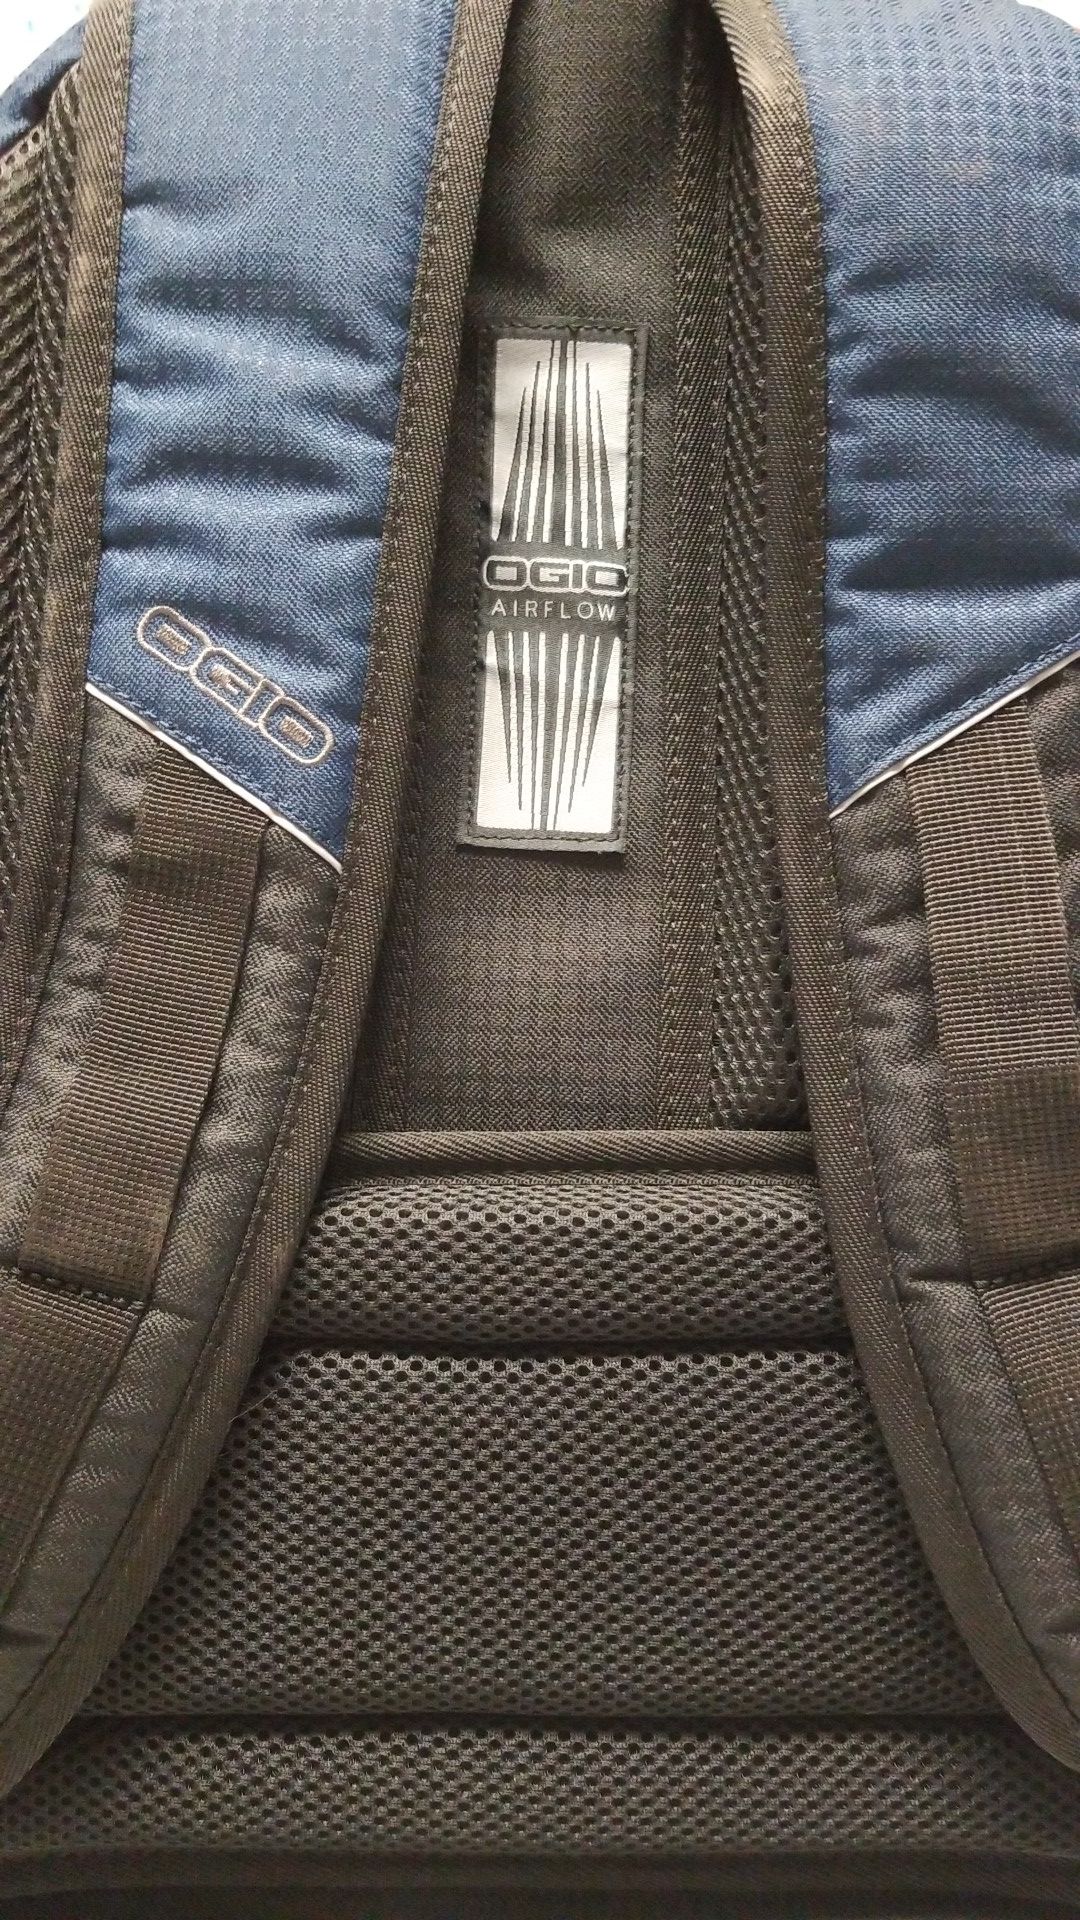 Ogio backpack